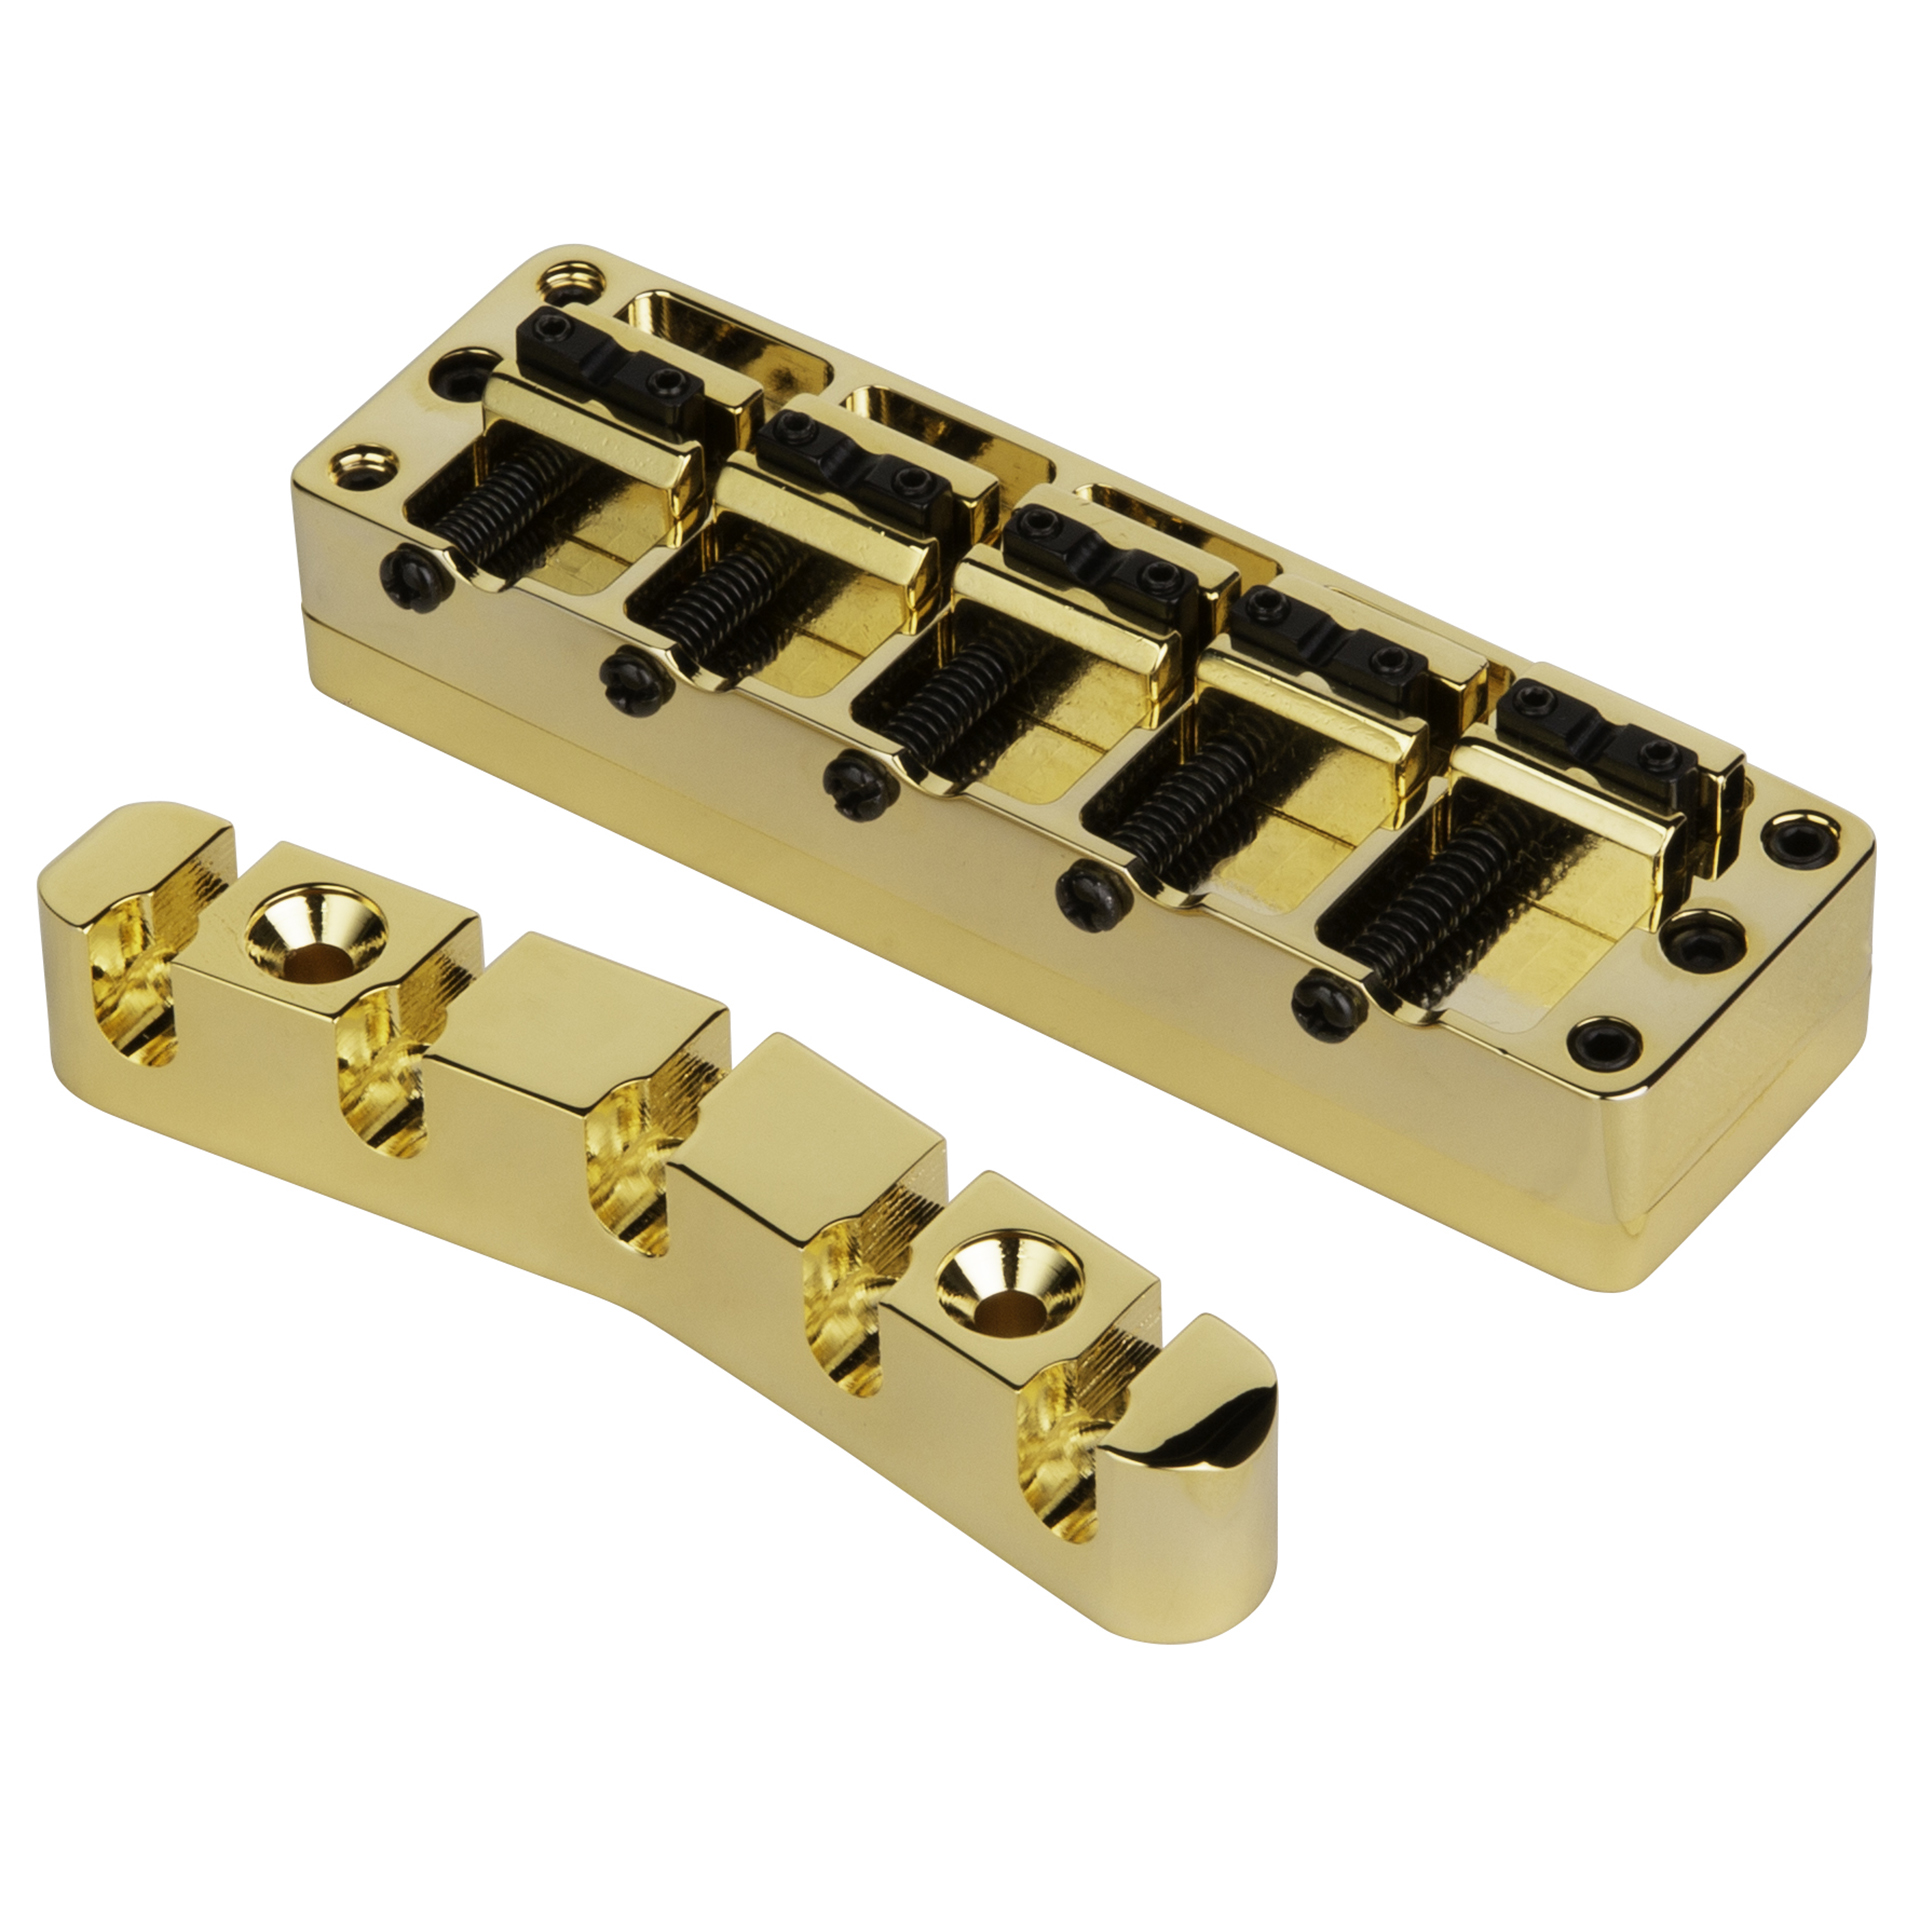 Warwick Parts - 3D Bridge + Tailpiece, 5-String, Broadneck, Brass - Gold